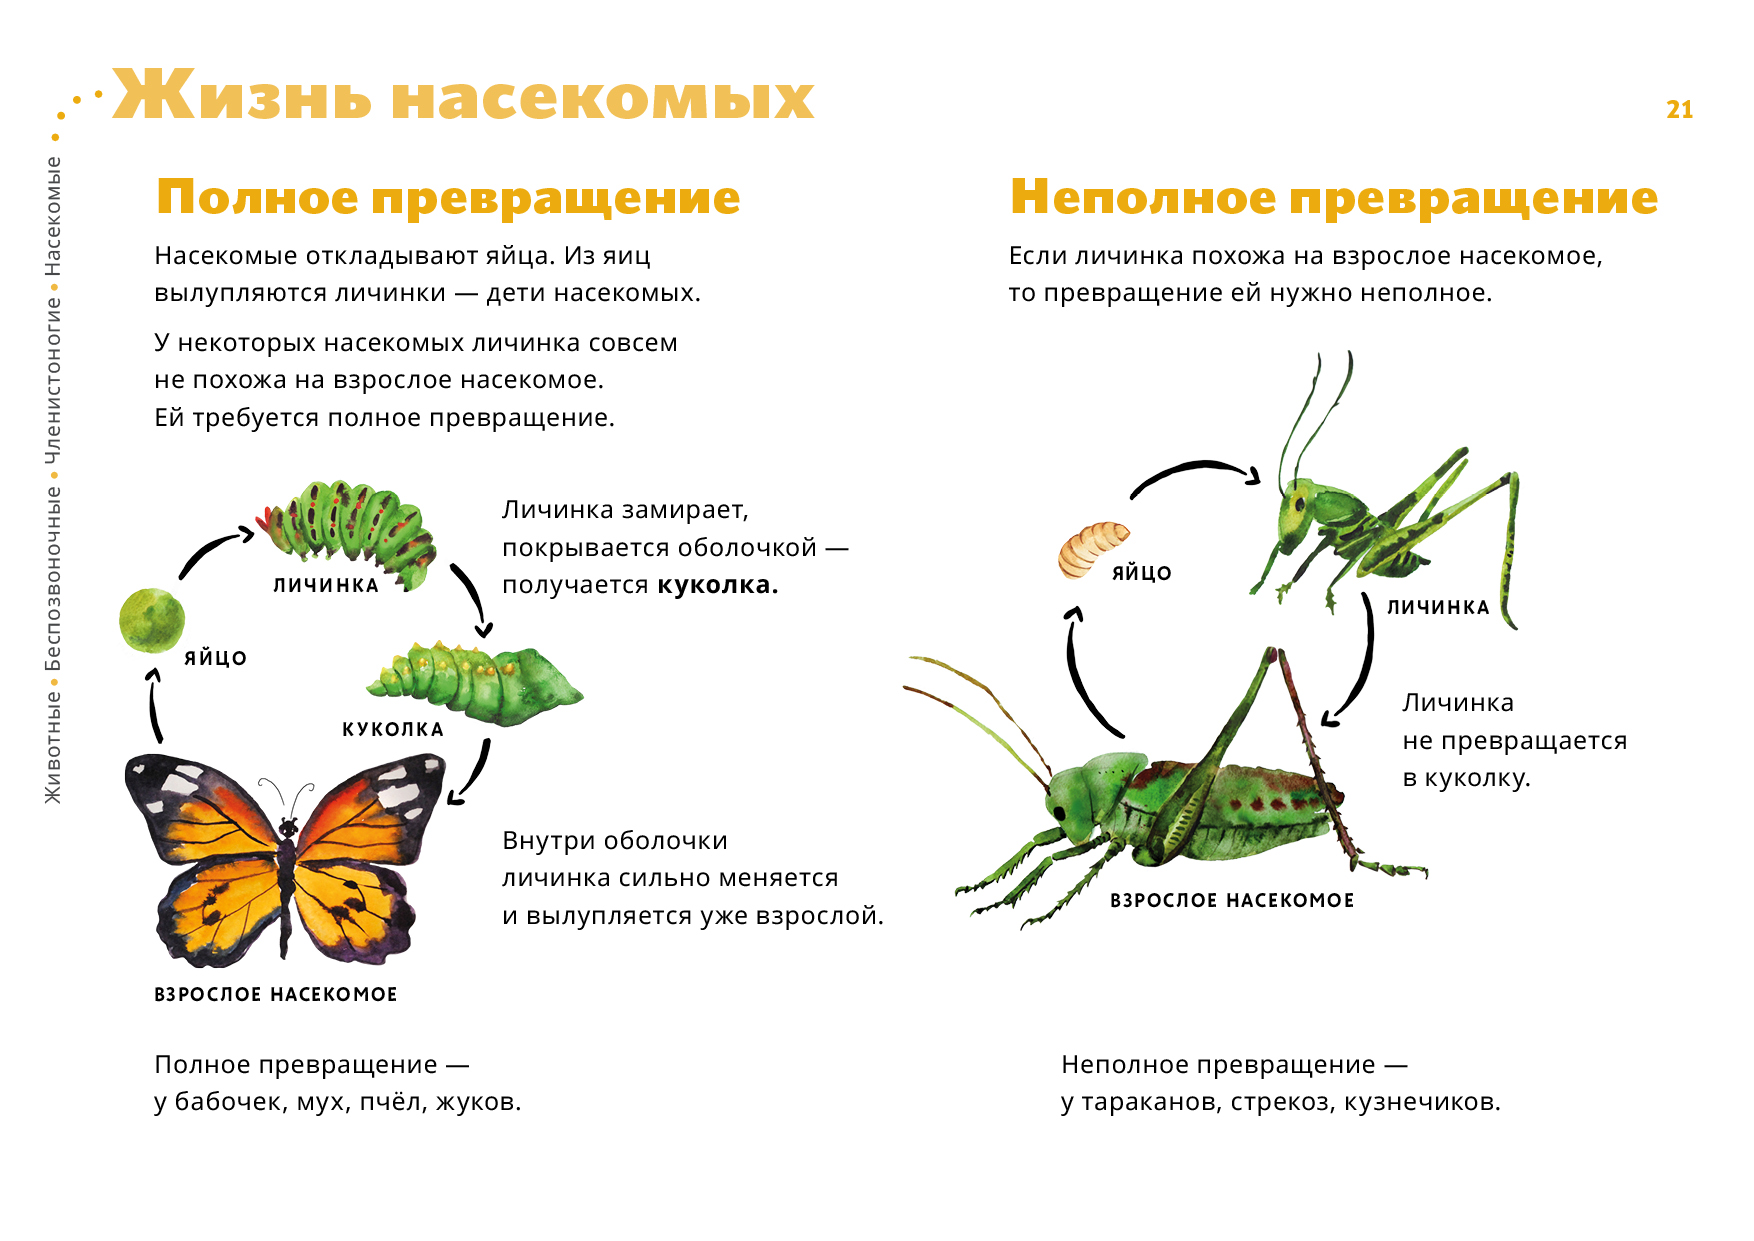 Какой тип развития характерен для бабочек